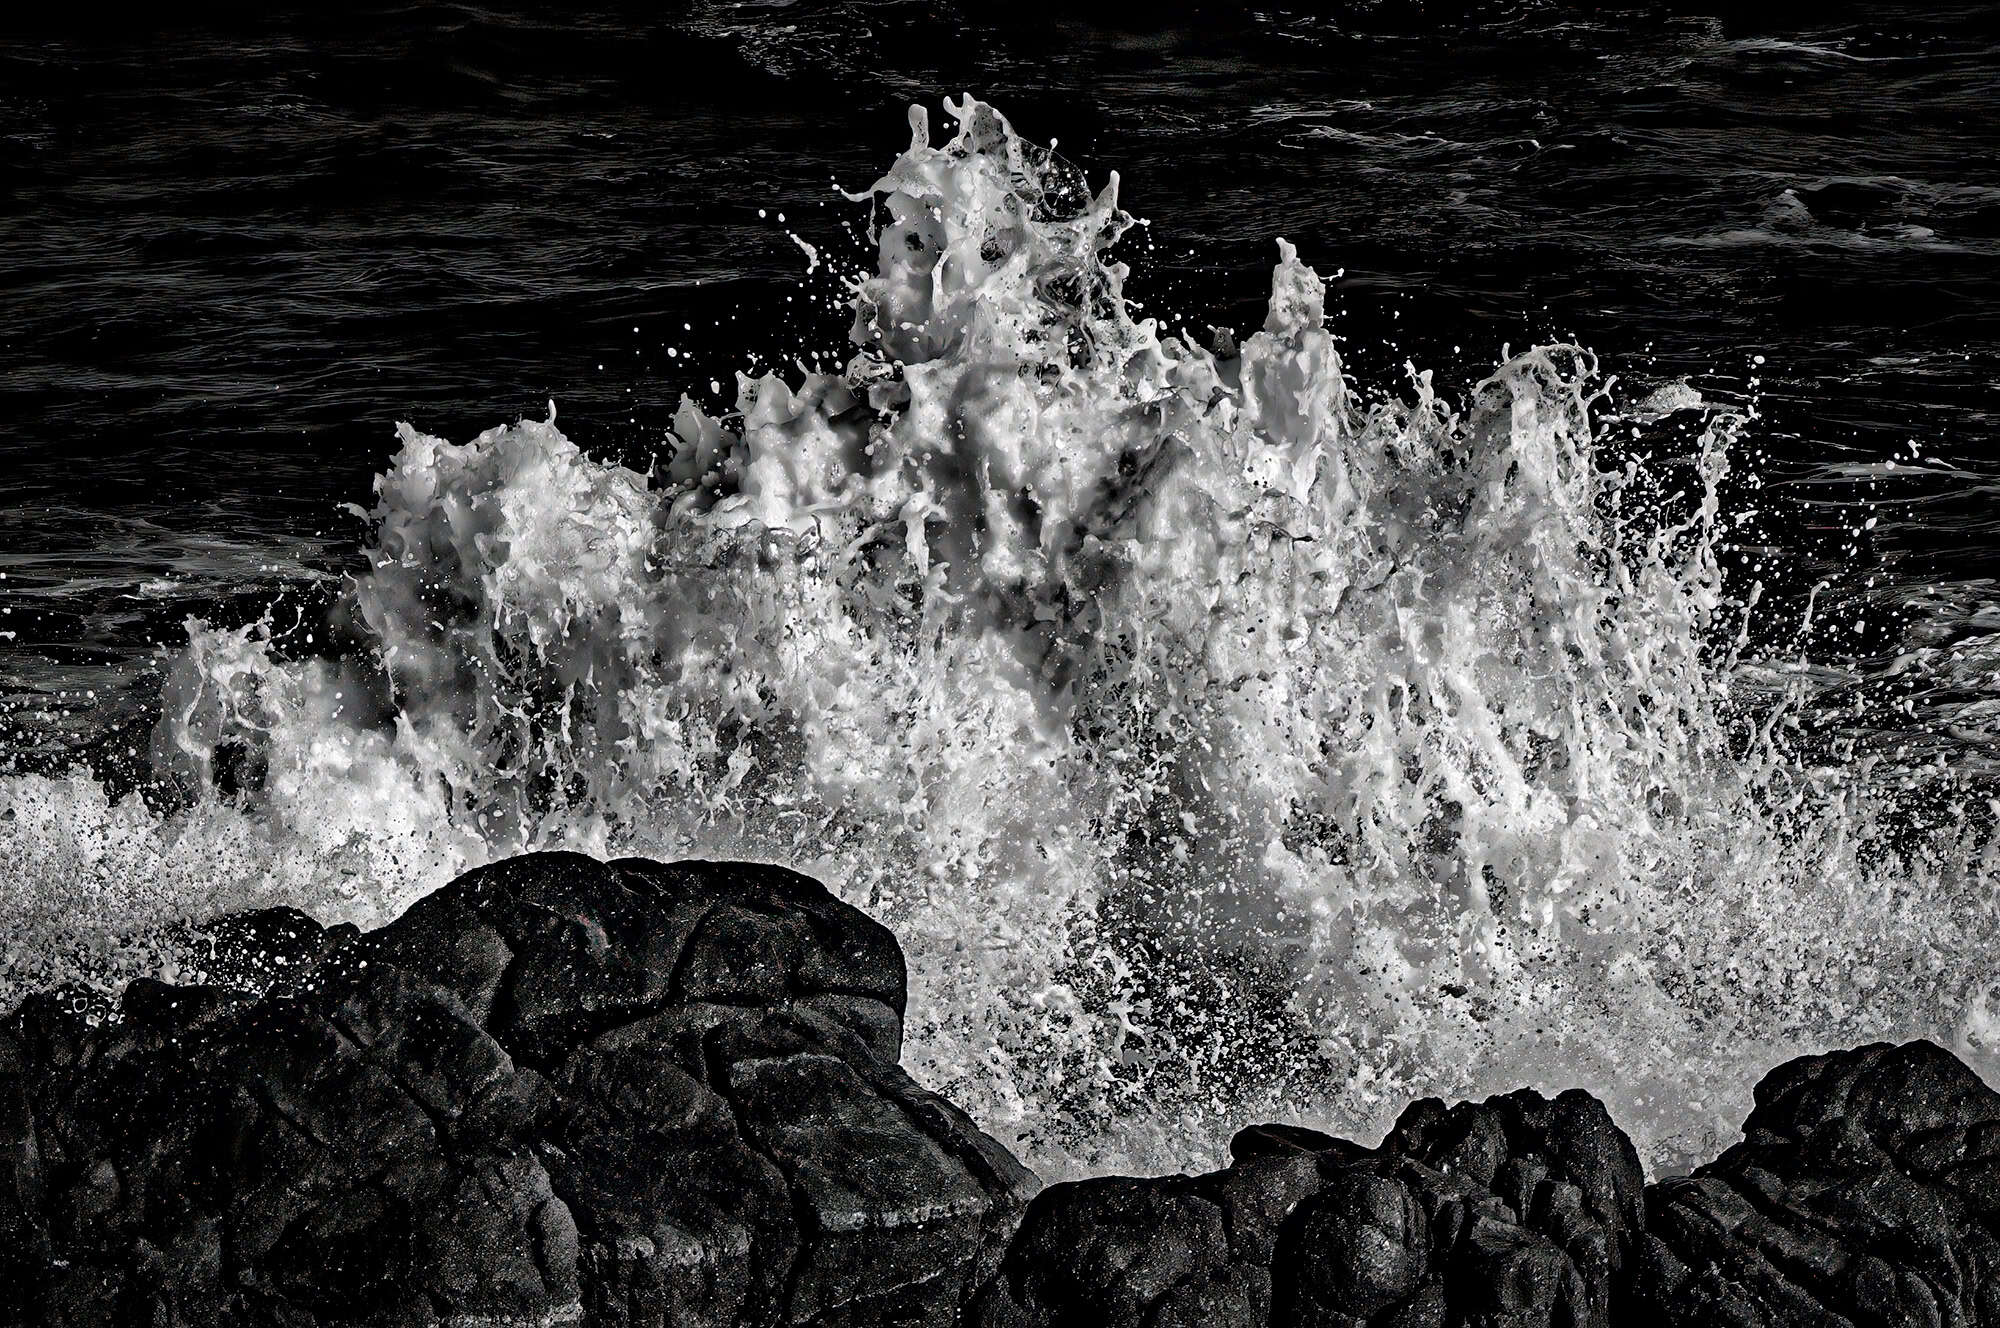 Waves splashing against rocks on the Pacific Grove coastline